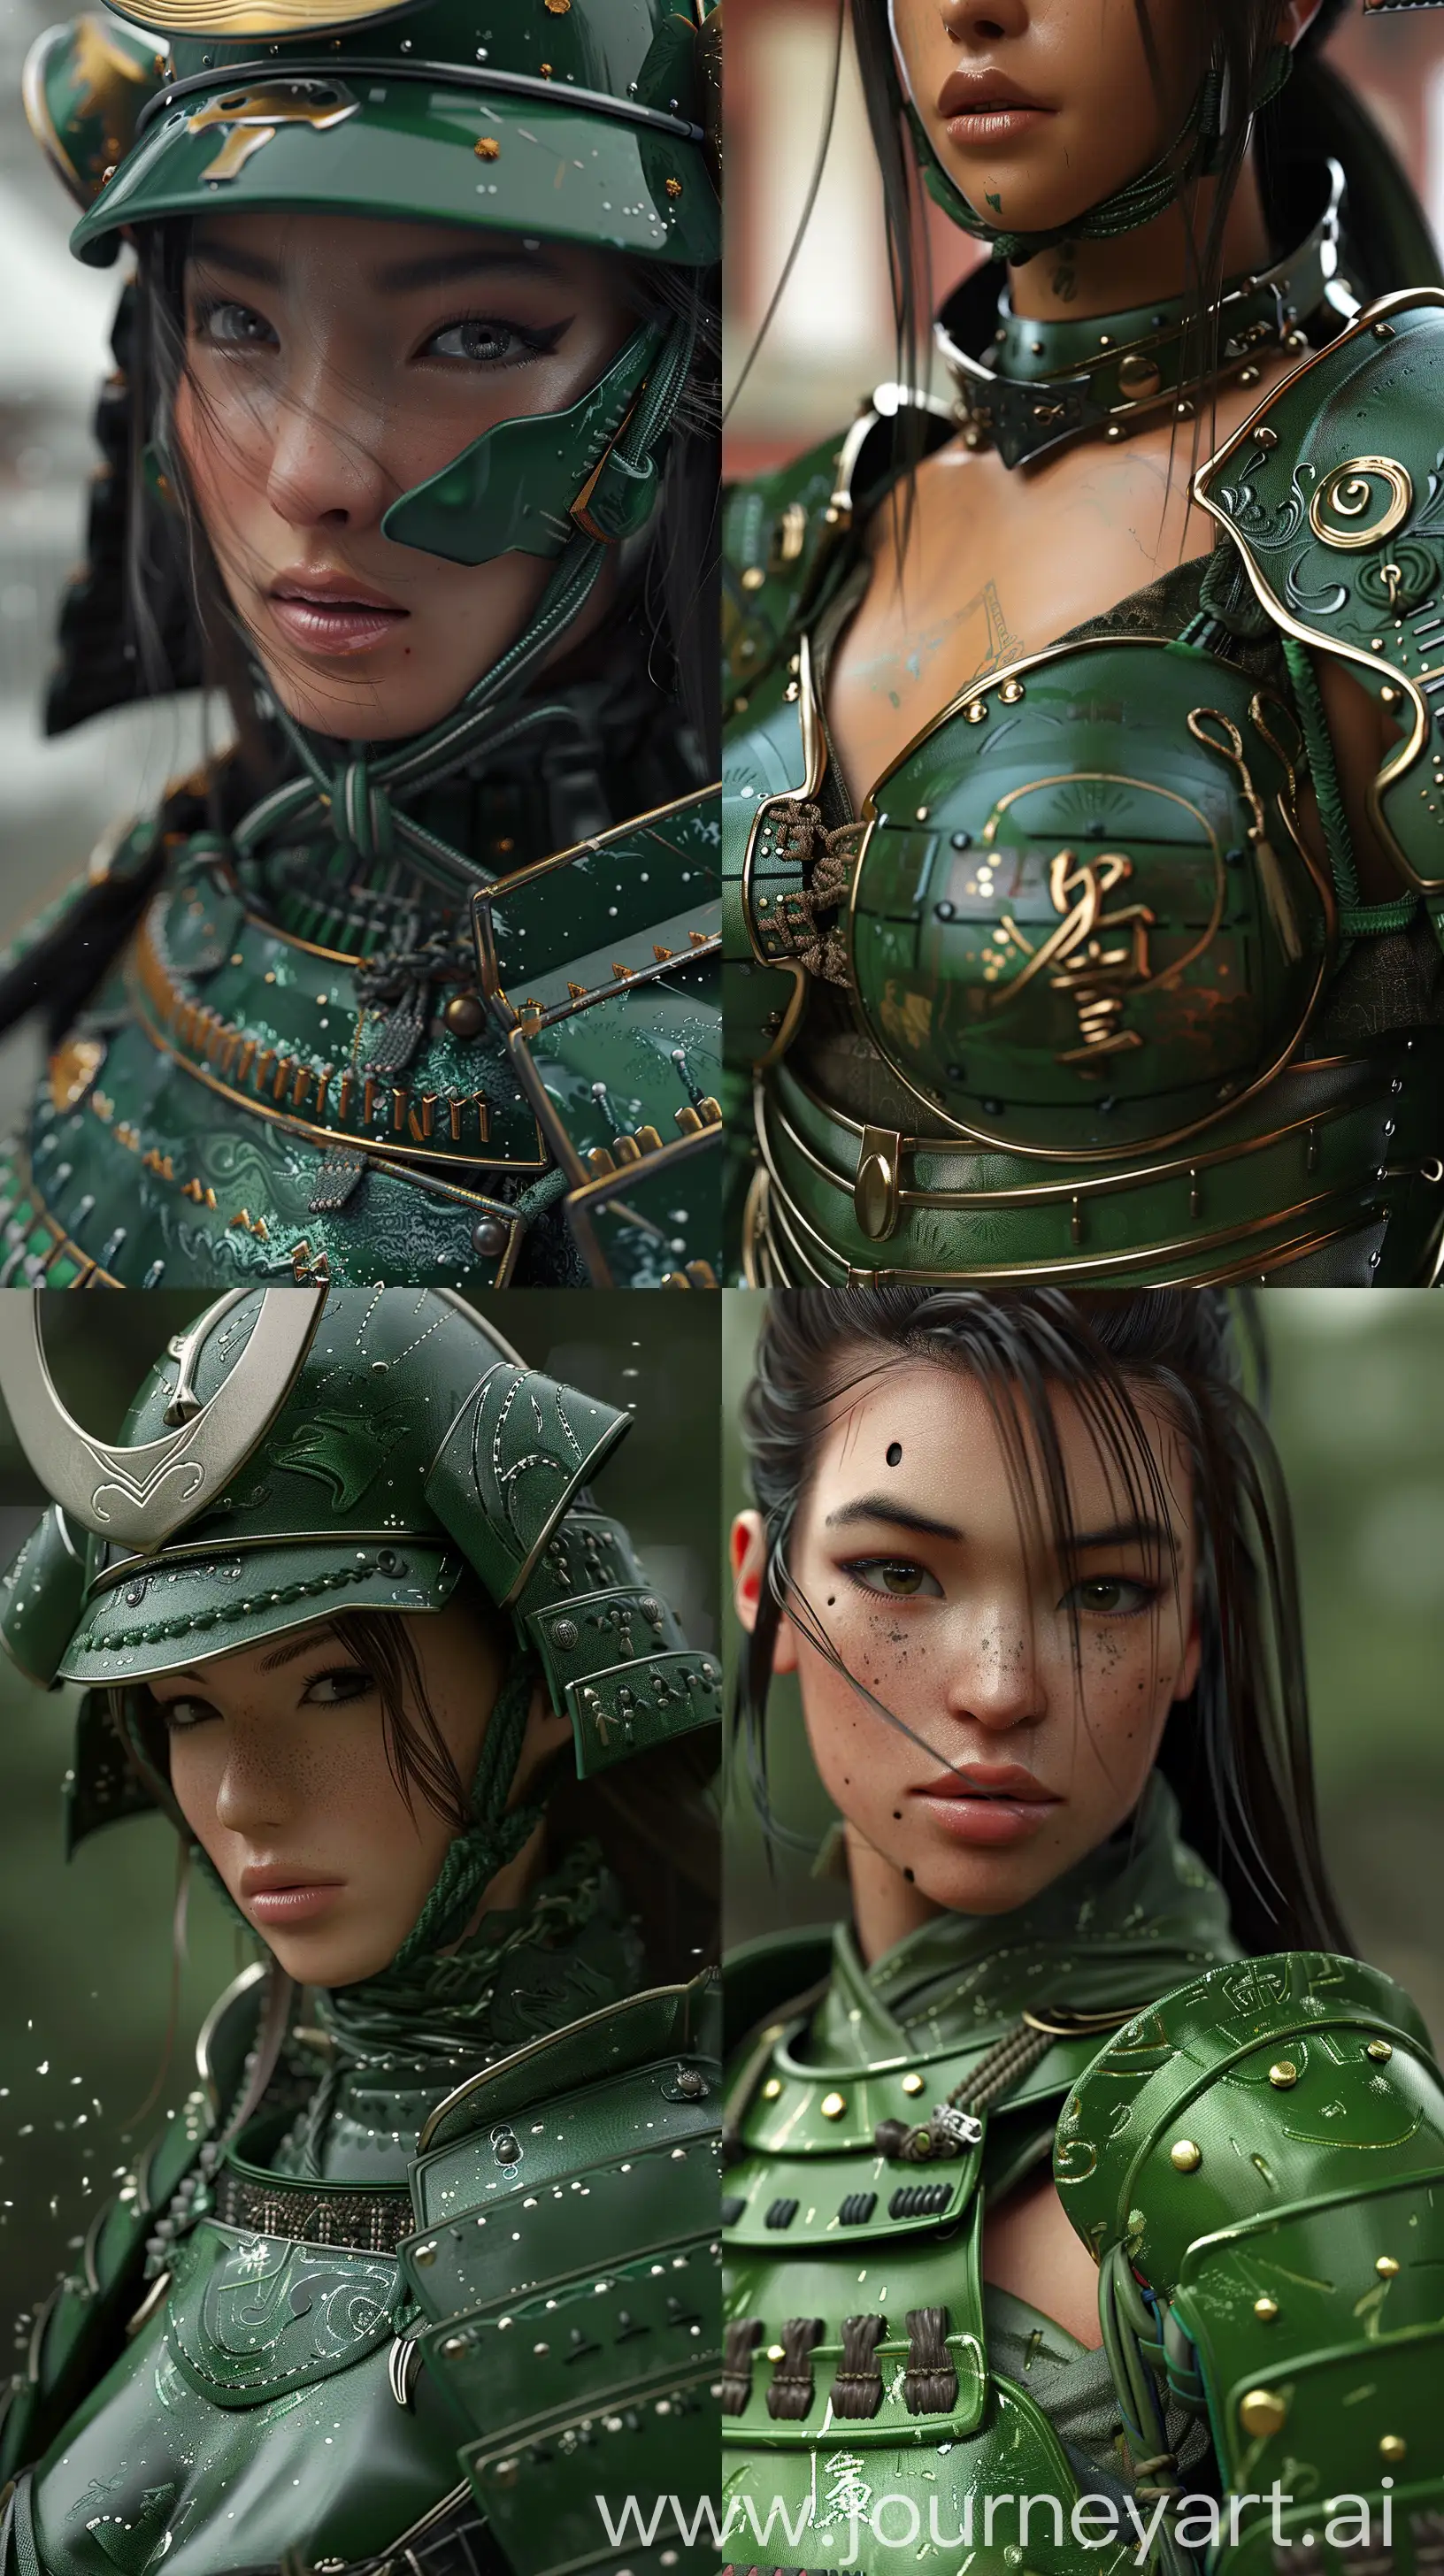 Closeup-Shot-of-Woman-in-Green-Samurai-Armor